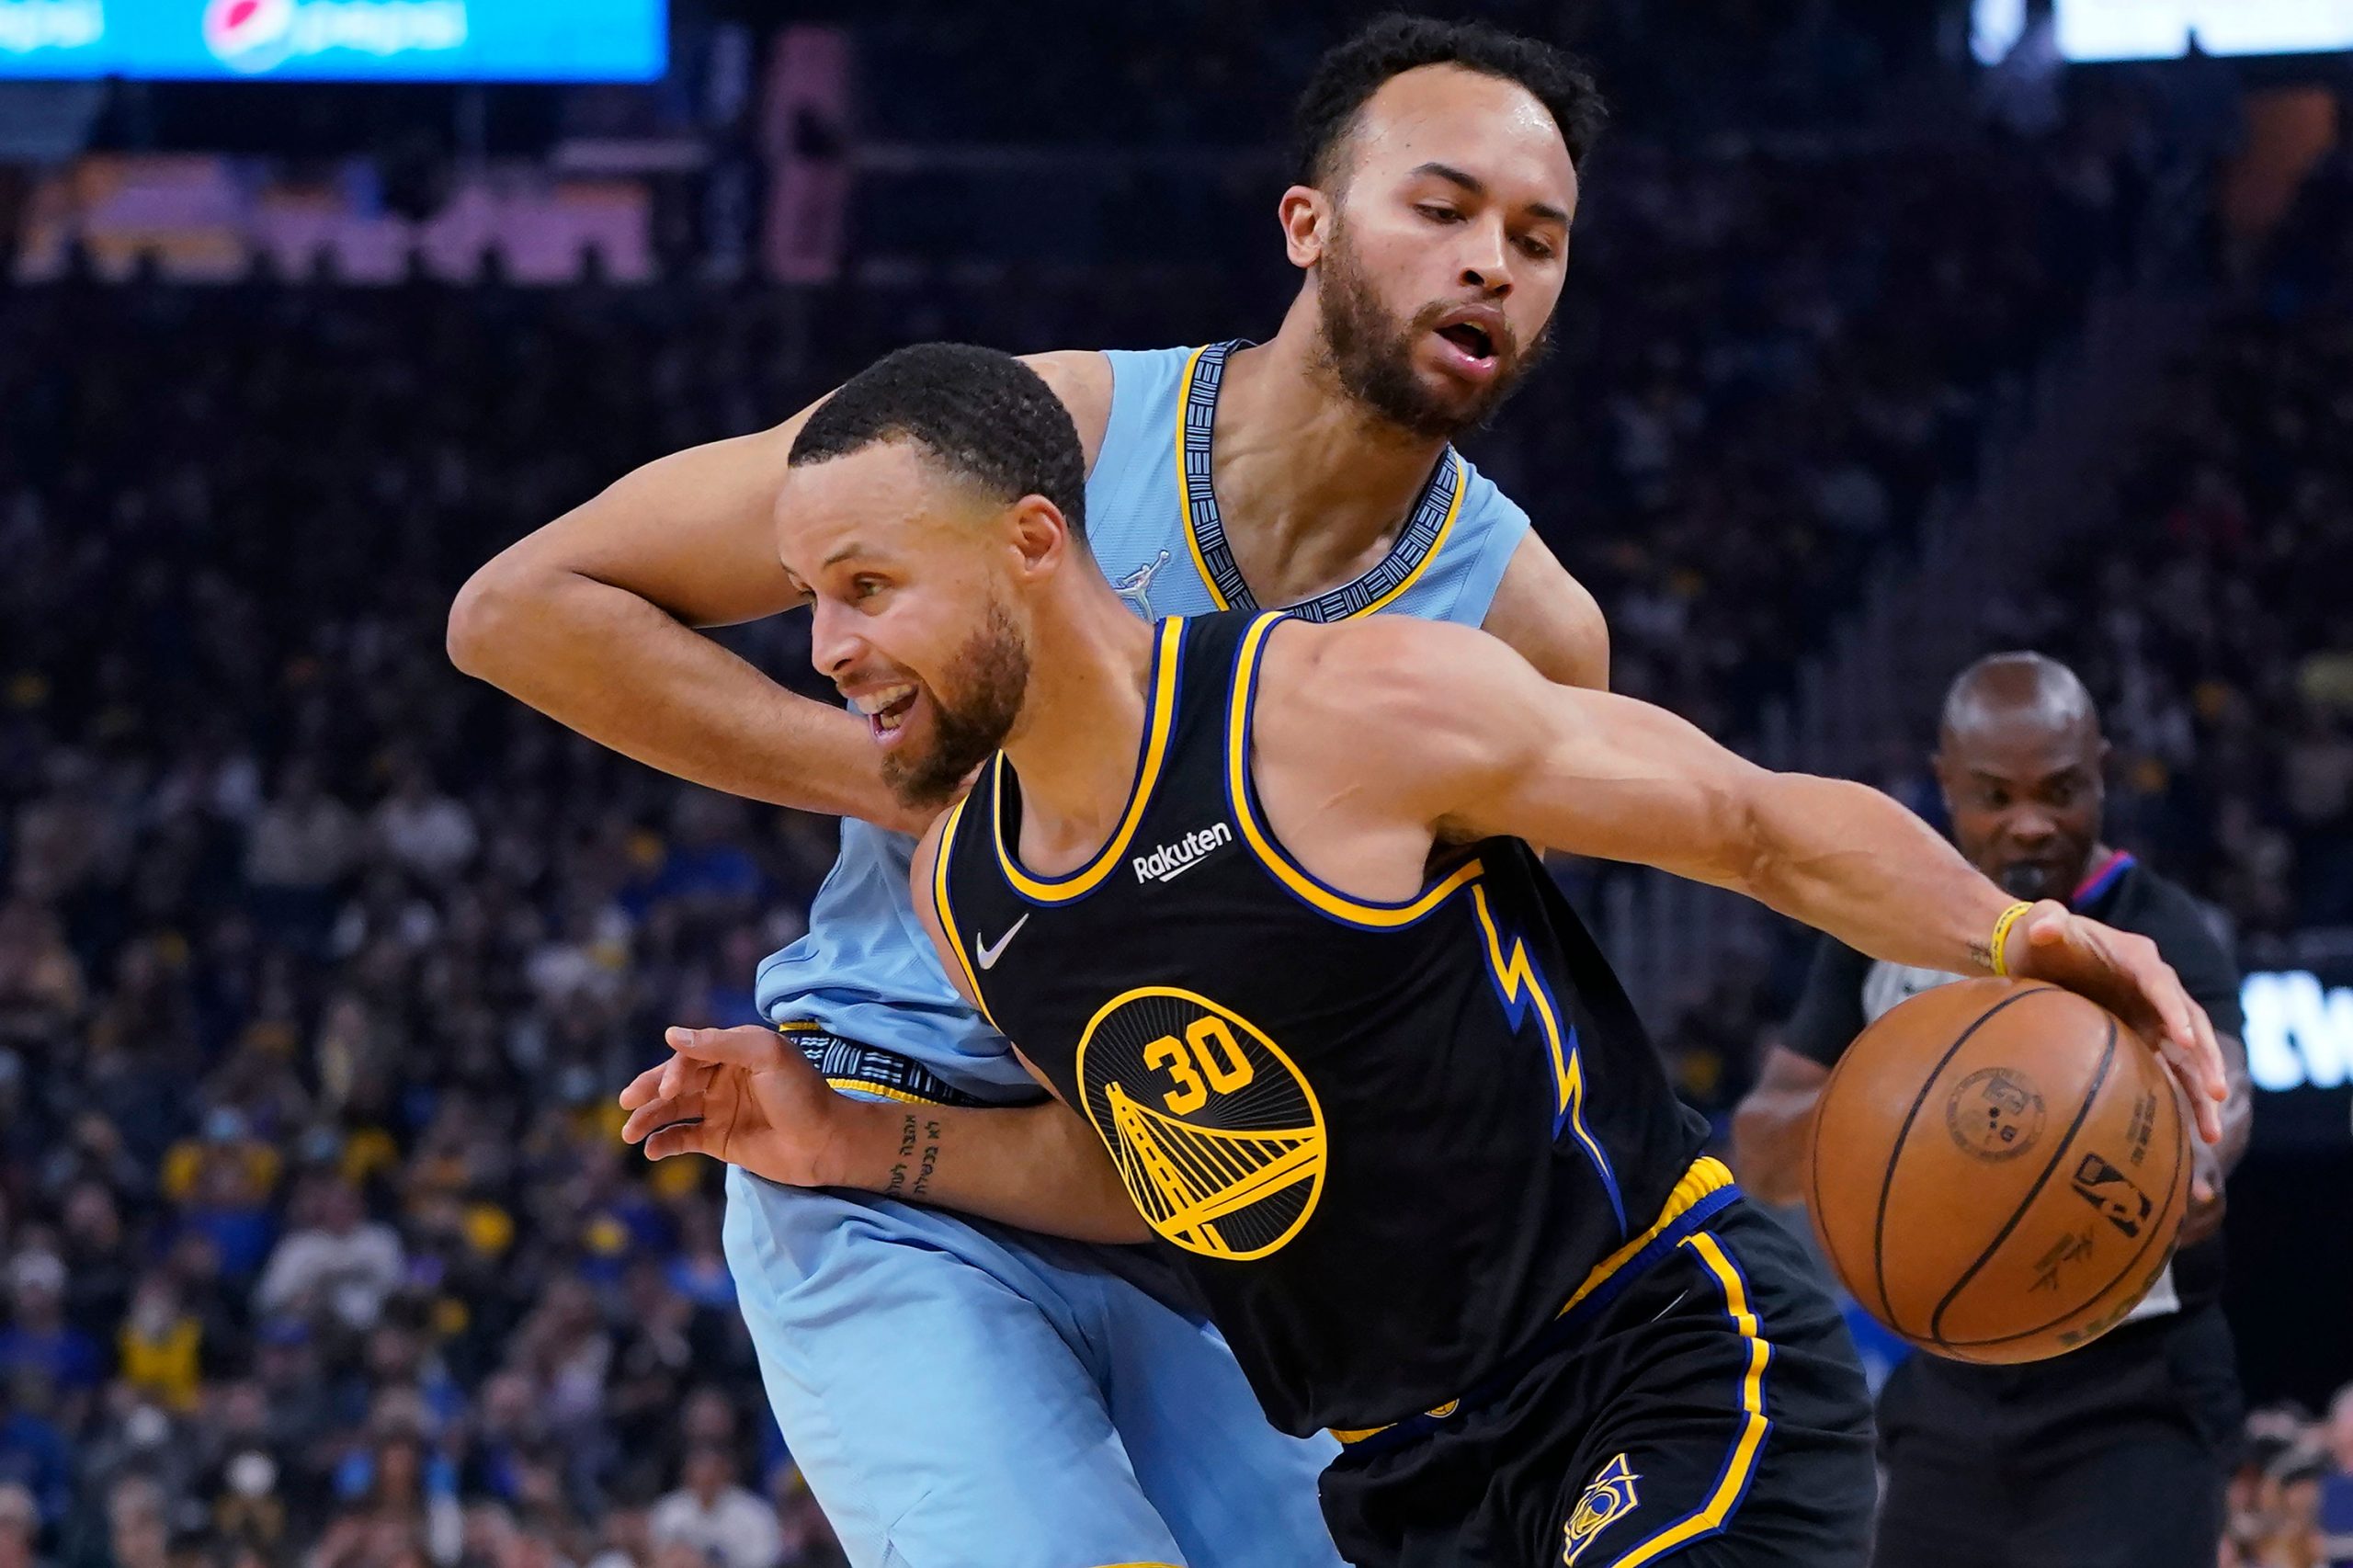 NBA: Stephen Curry, Klay Thompson lead Warriors past Morant, Grizzlies 142-112